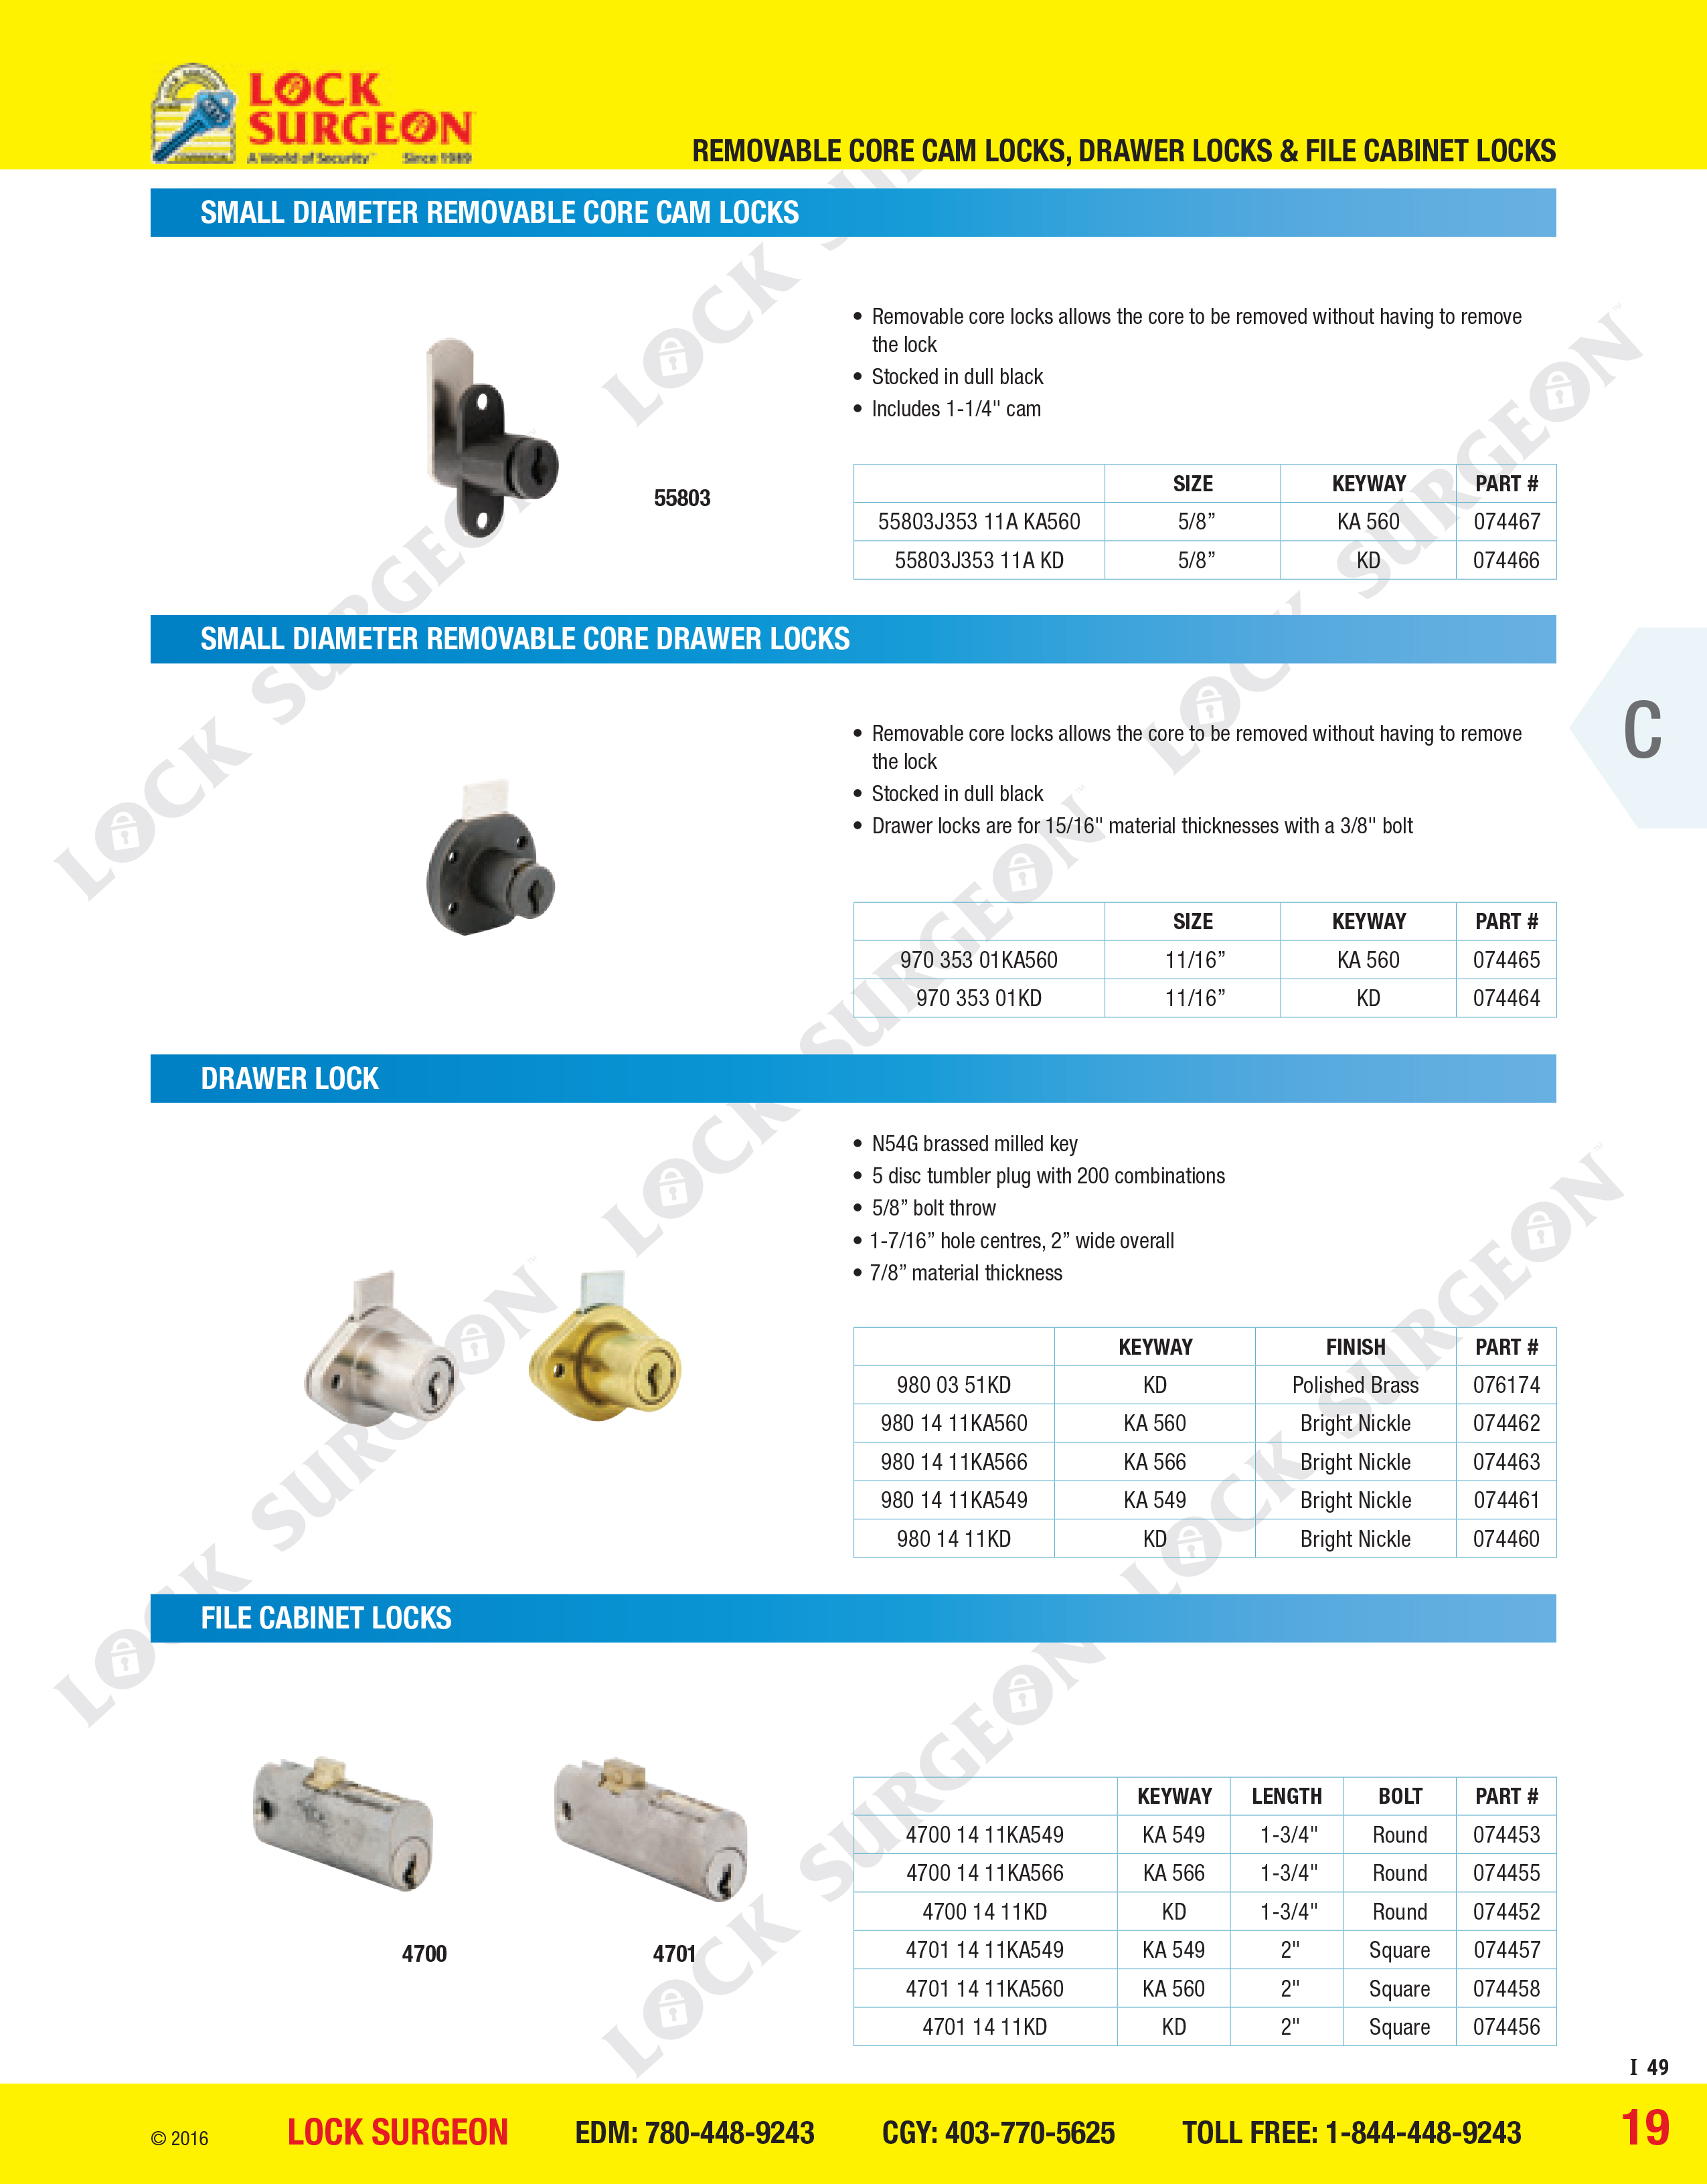 Small diameter removable core cam locks & core drawer locks, drawer lock and file cabinet locks